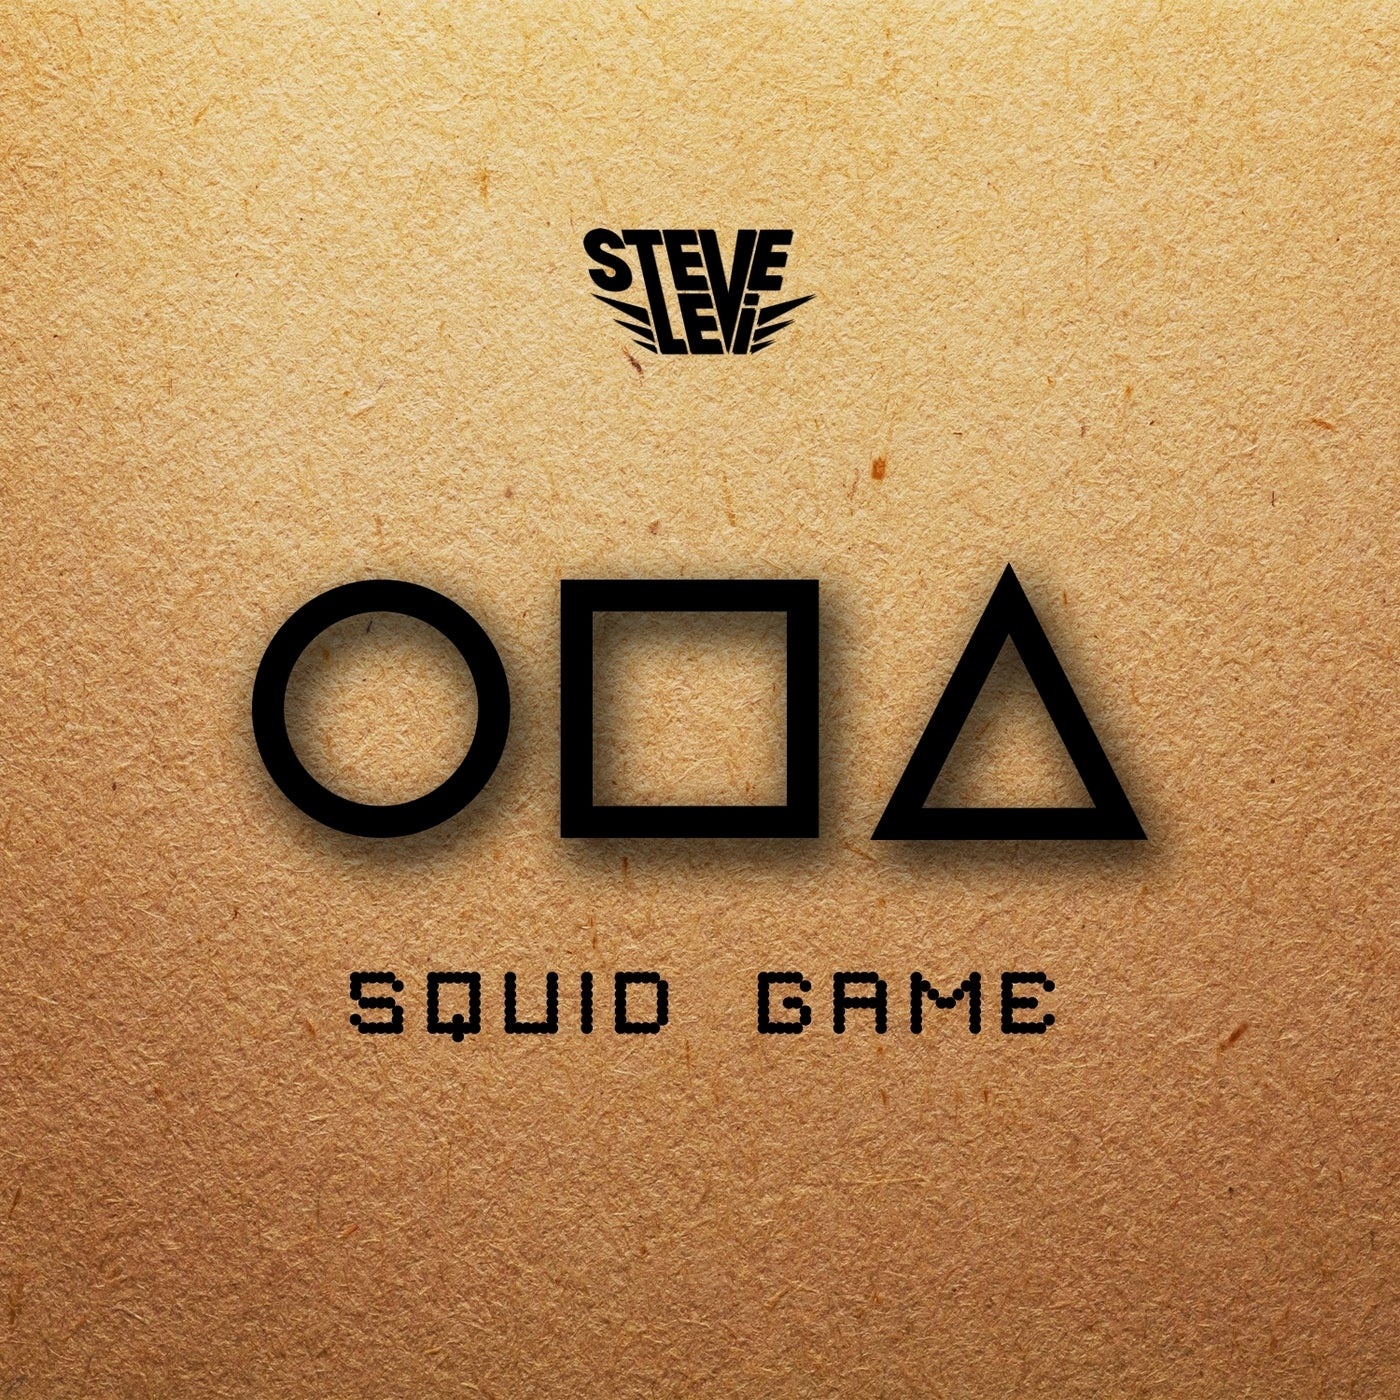 Steve Levi - Squid Game [SRZ062]